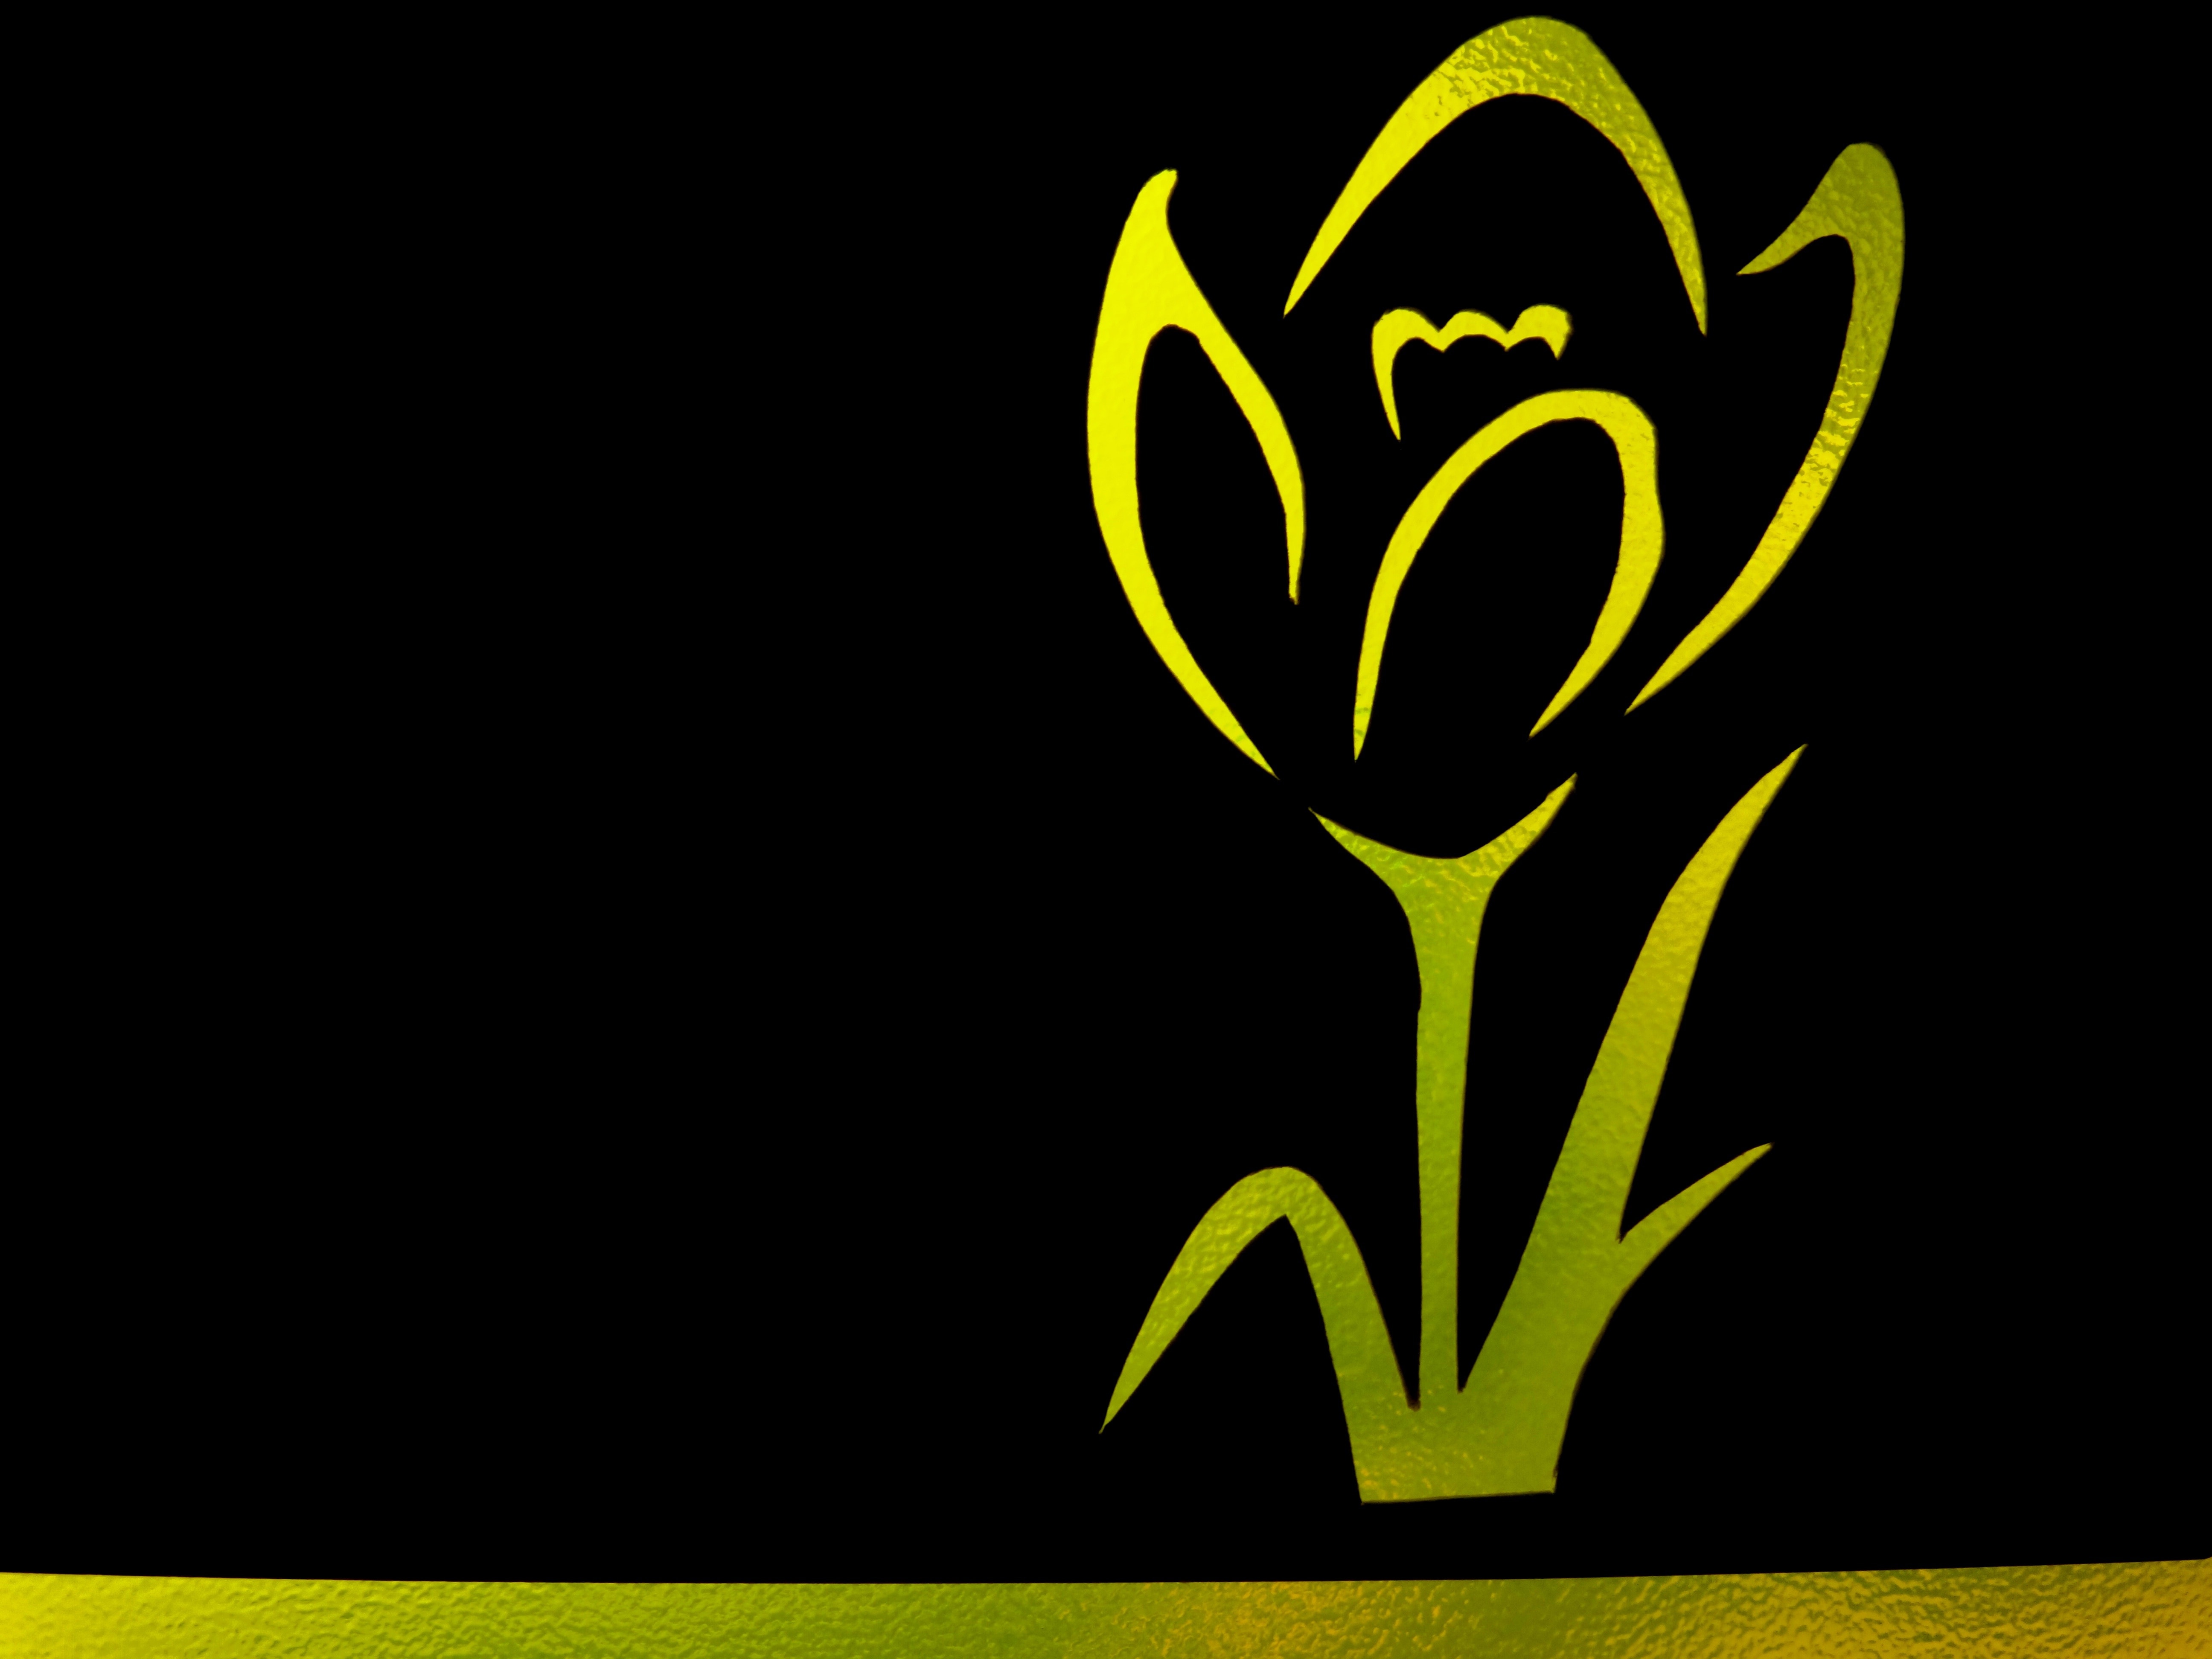 yellow flower illustration